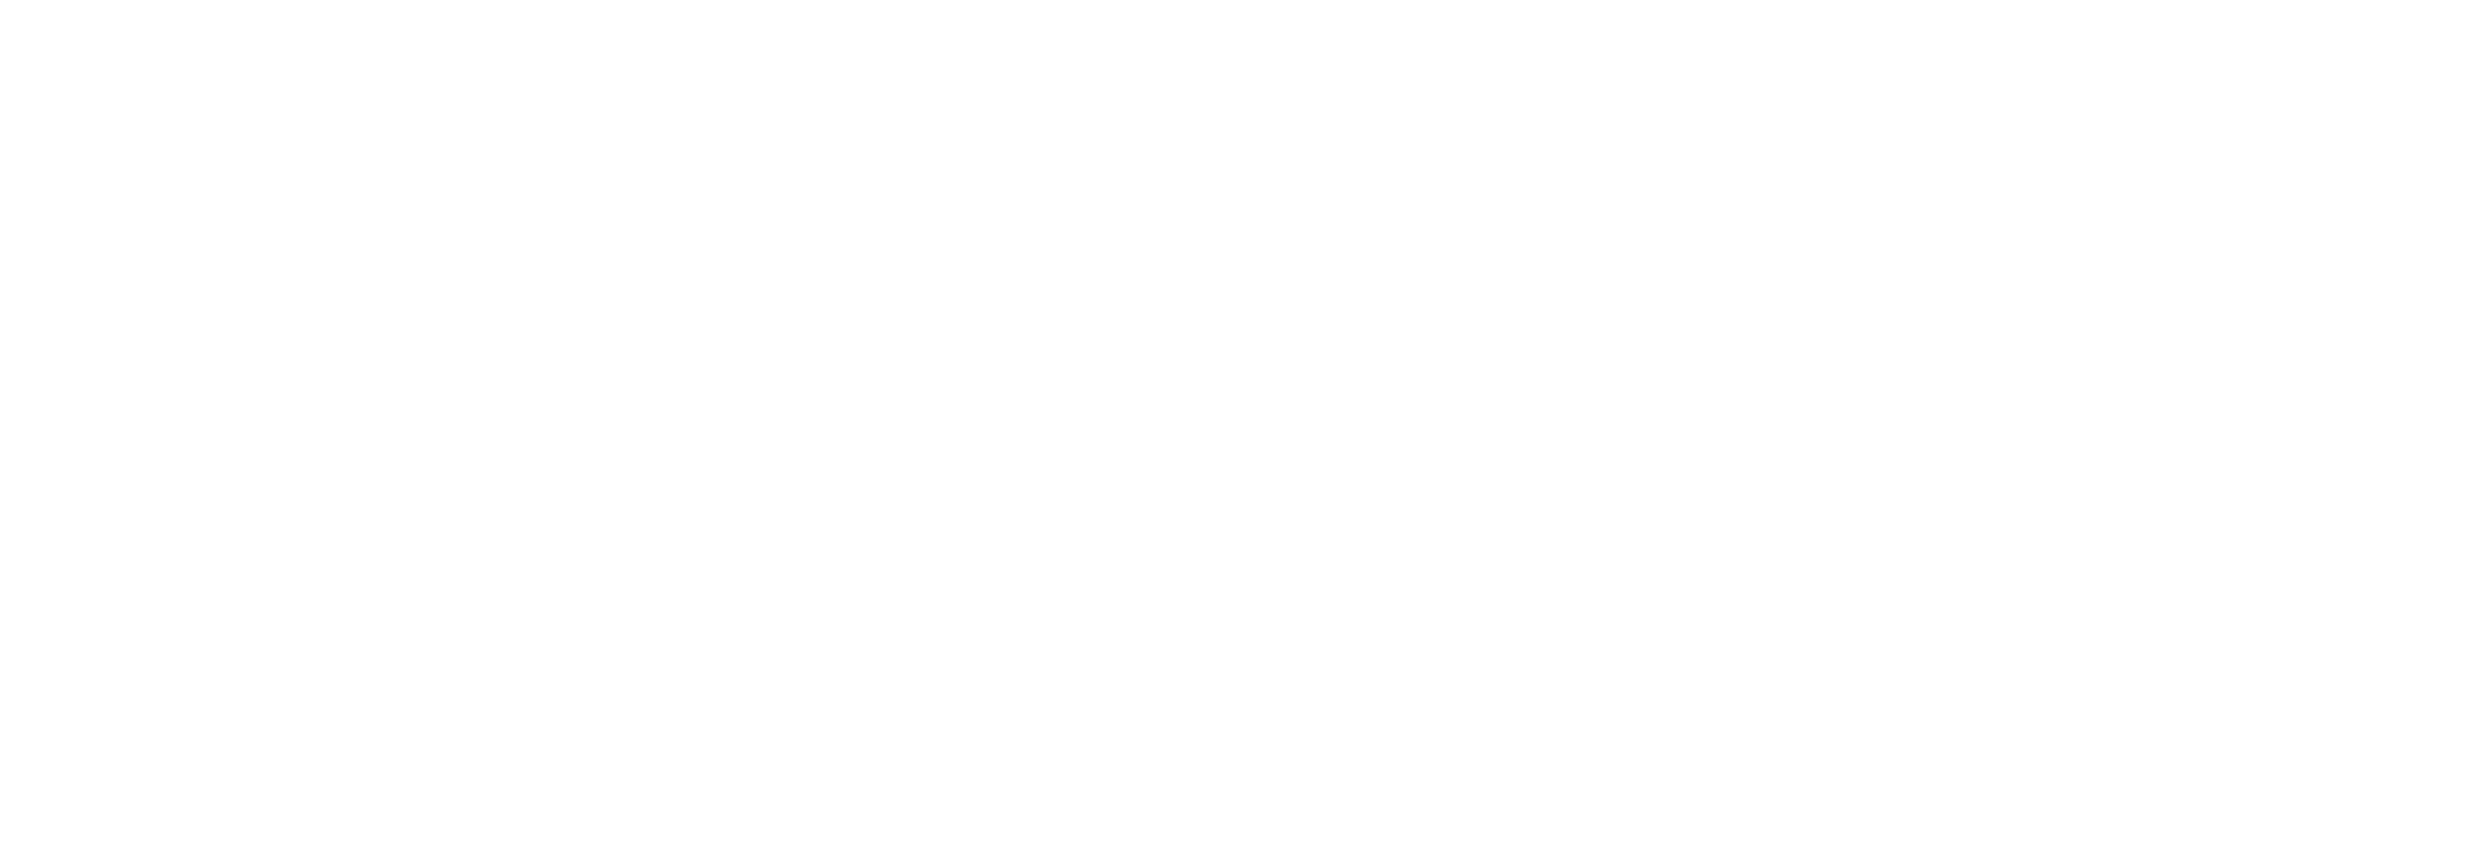 ZenithNet Zero logo, Transparent background, white letters